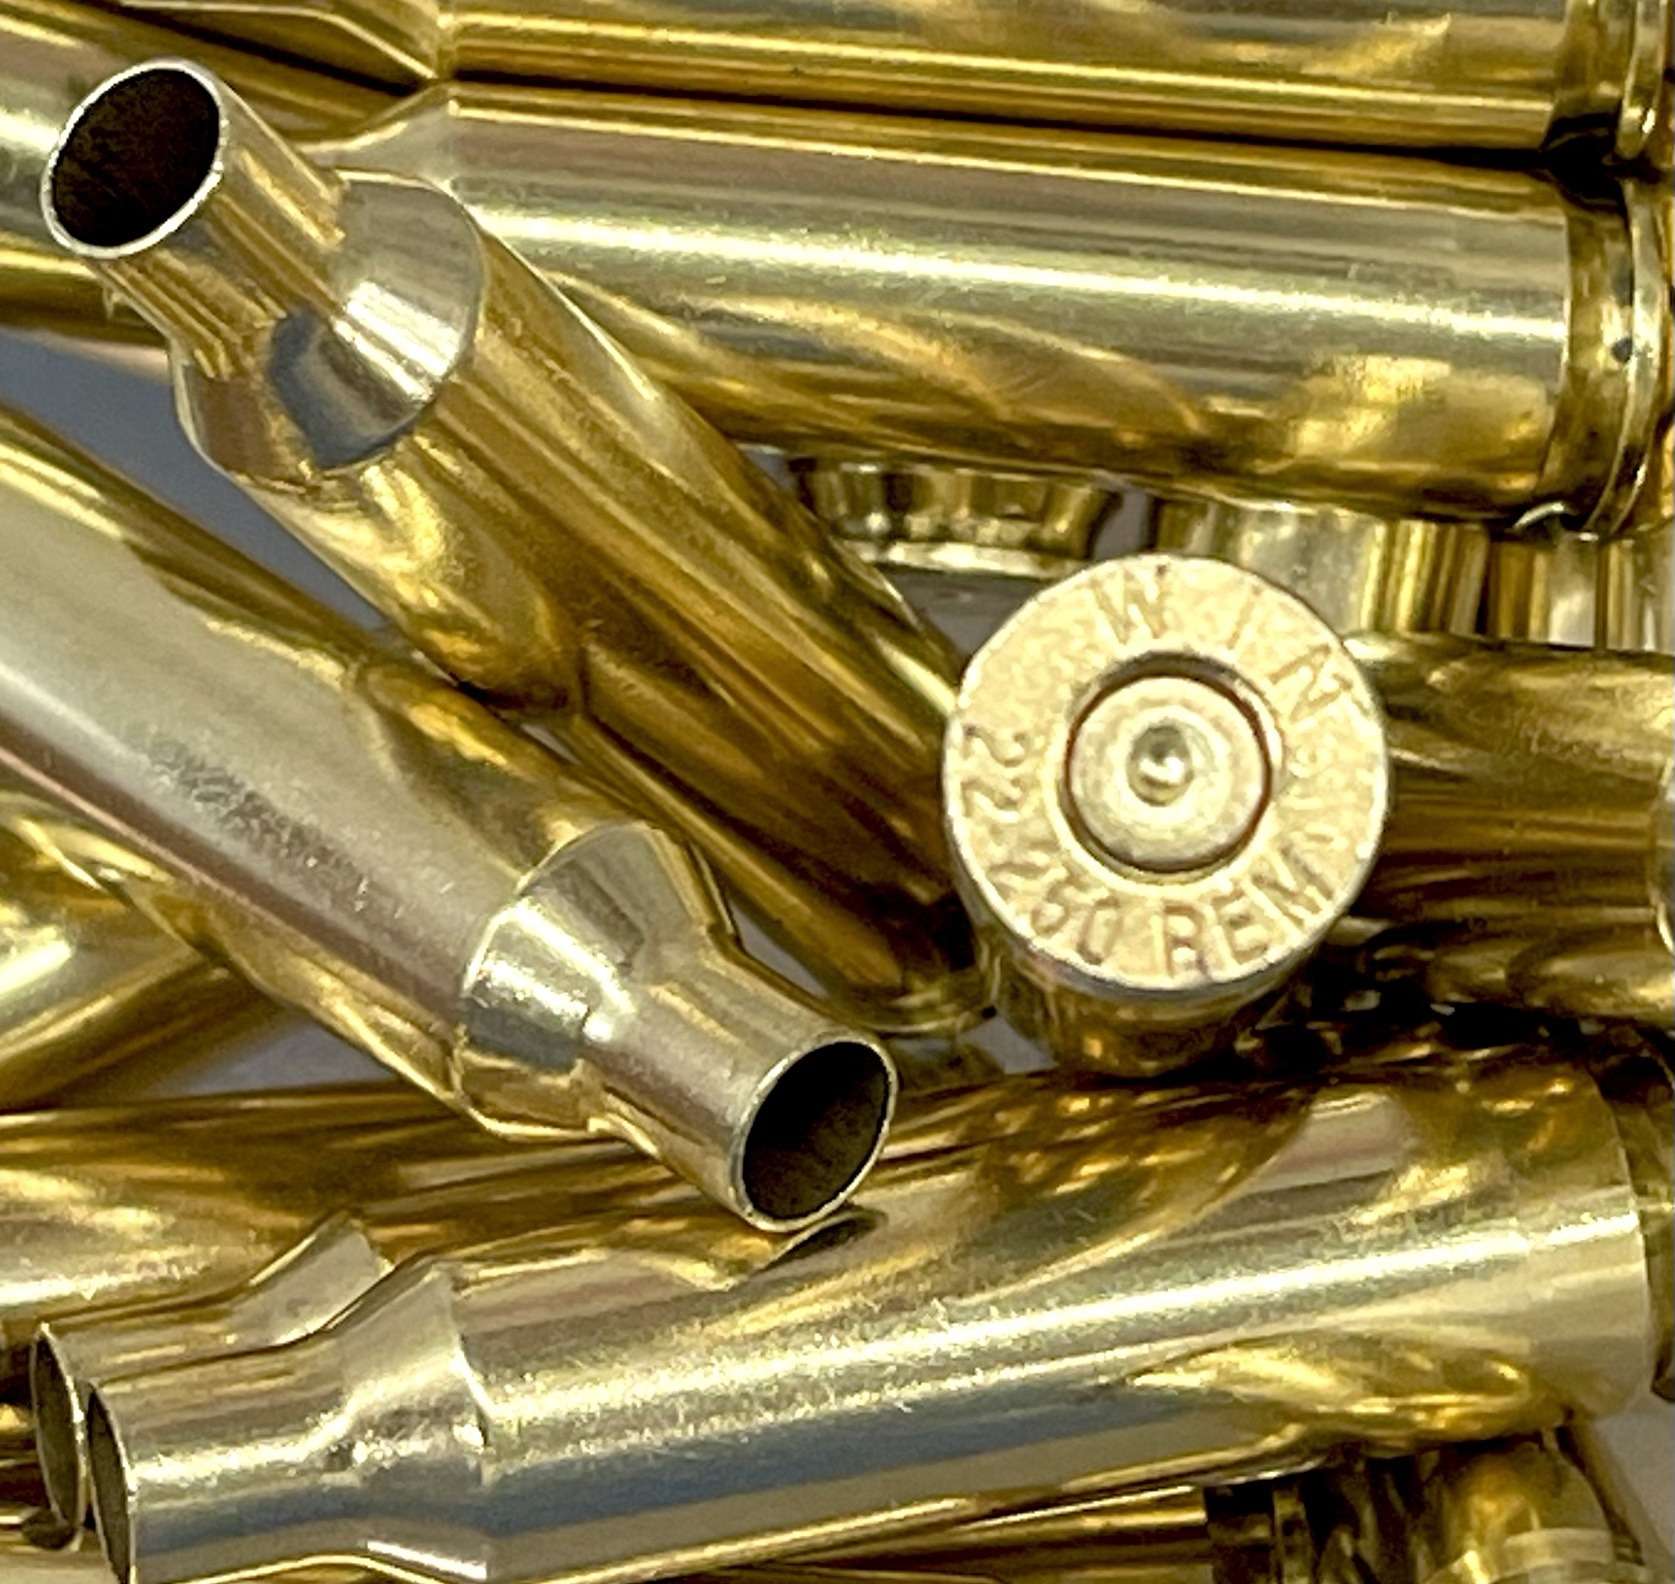 22-250 Remington Once Fired Reloading Brass - Blue Ridge Brass